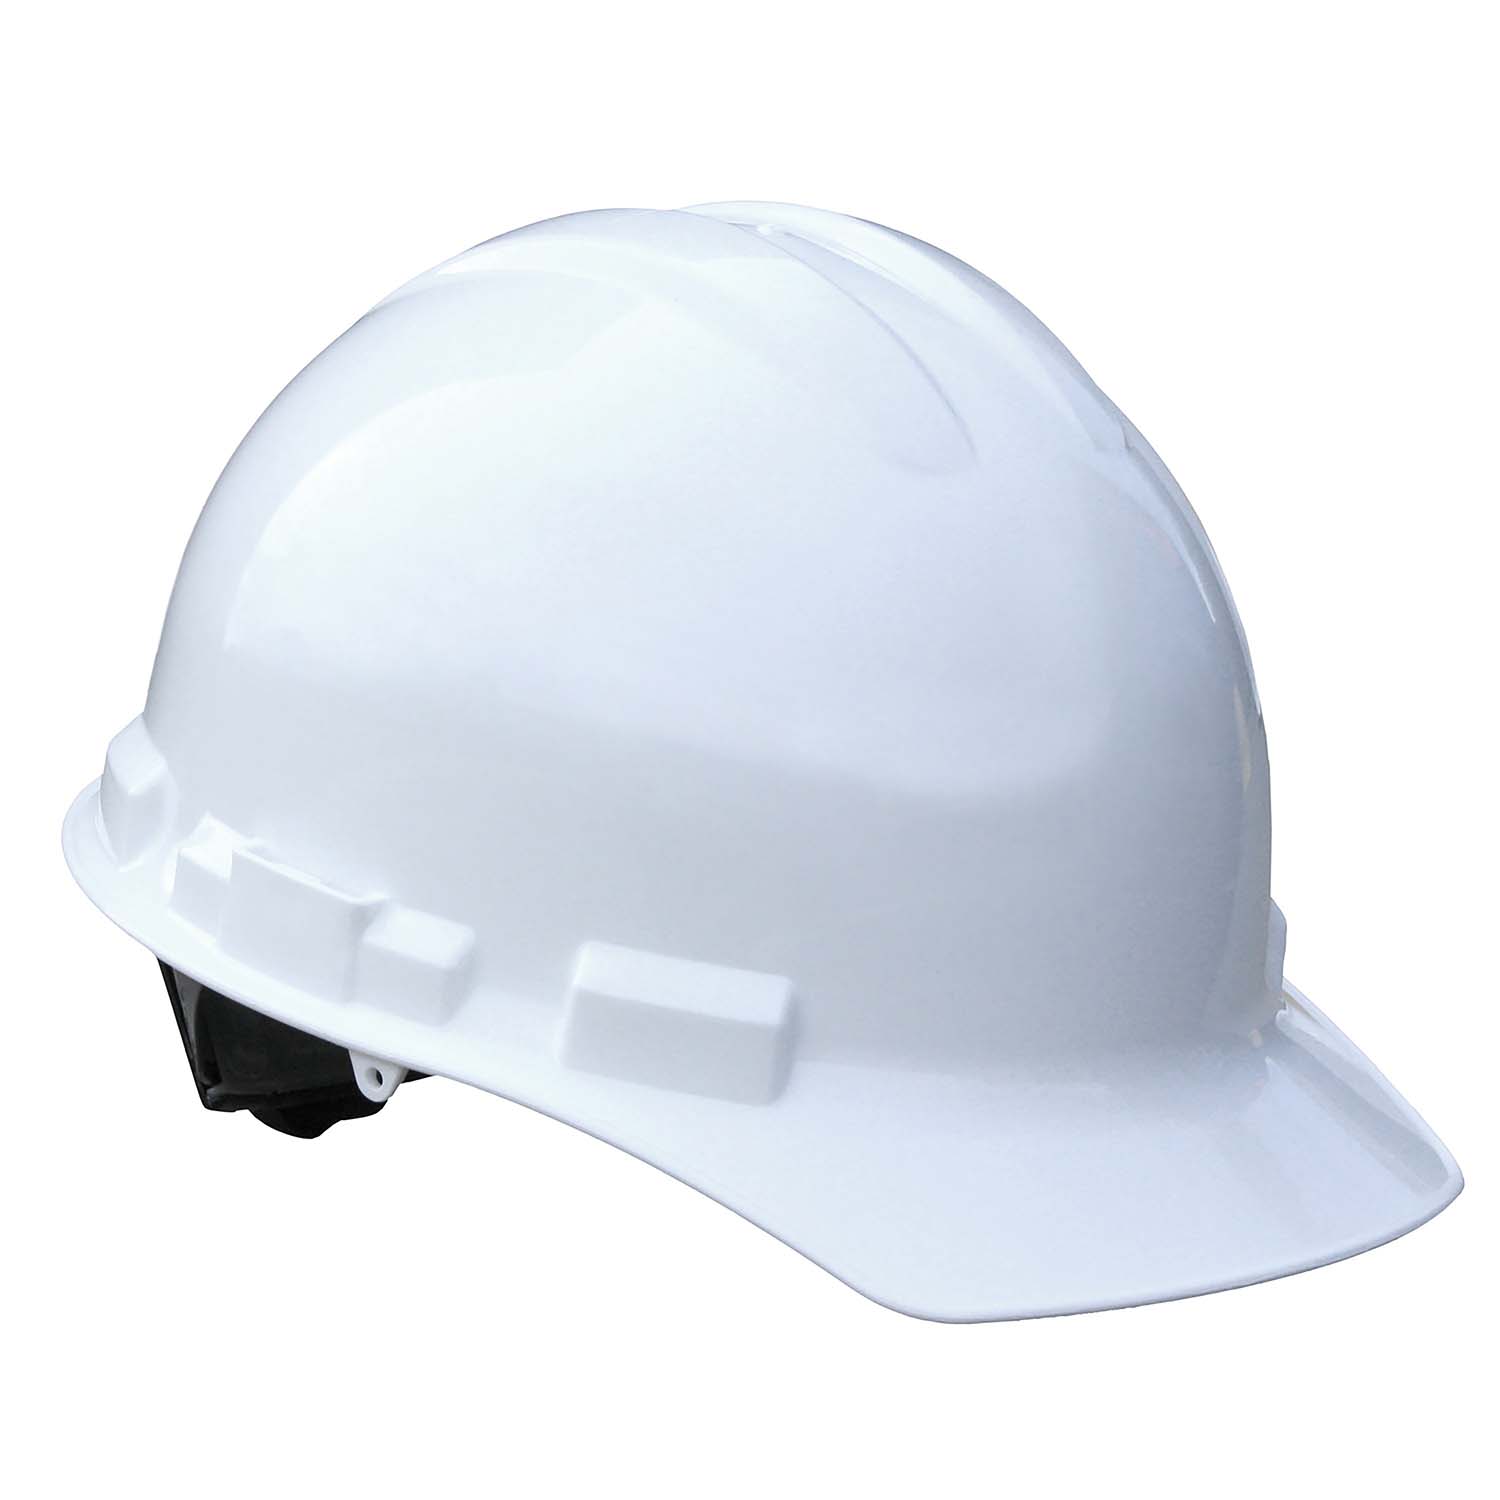 DPG11 Cap Style Hard Hat - White